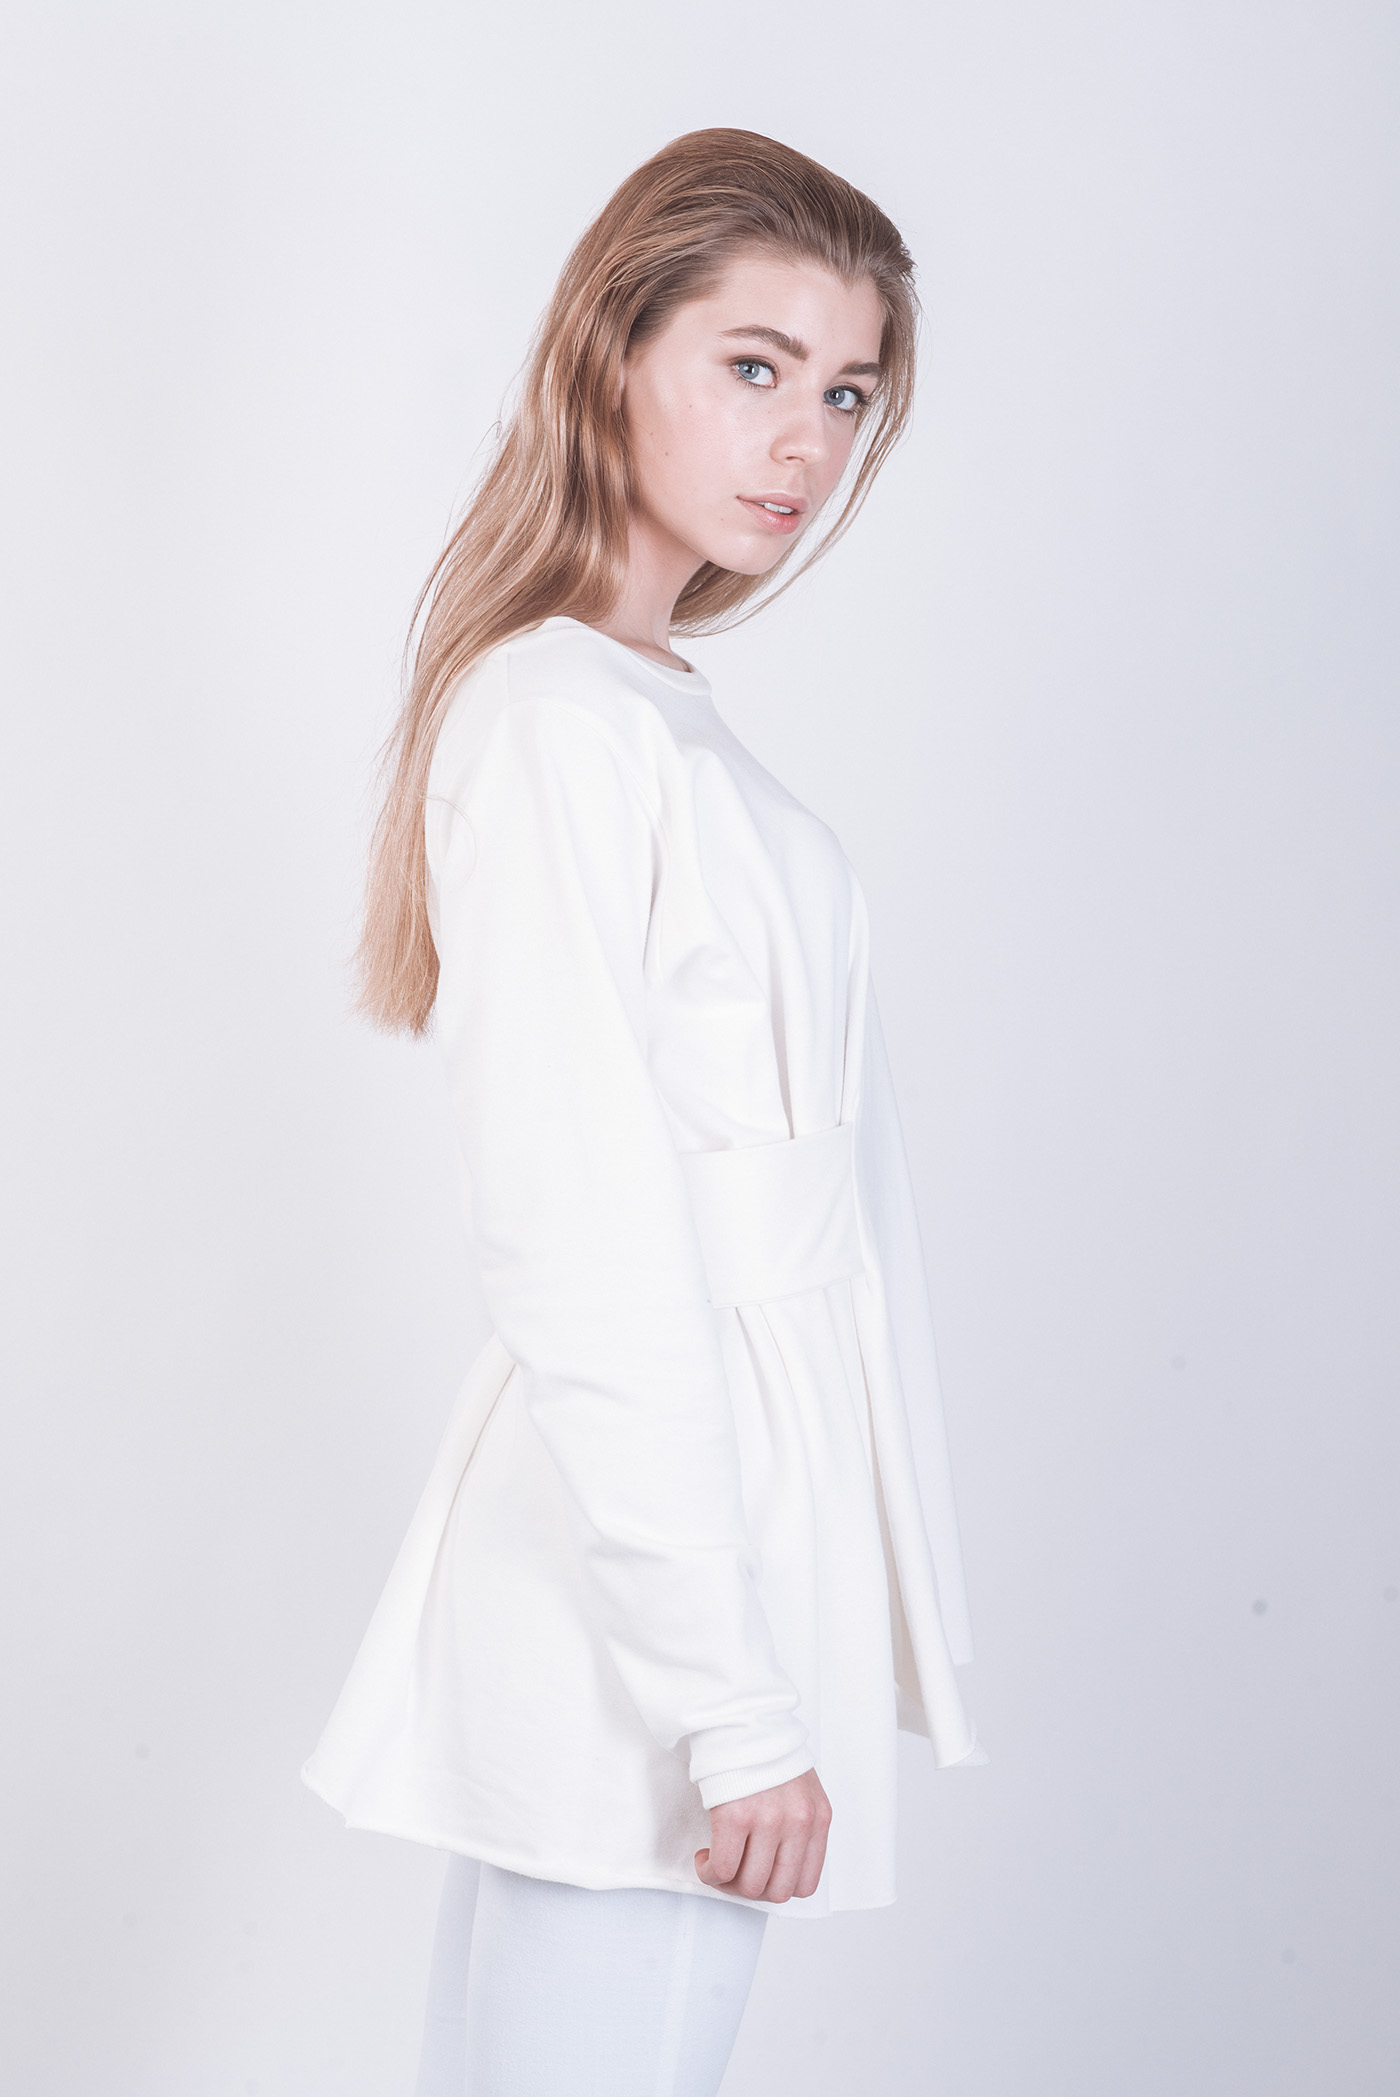 editorial beauty Czech designer portrait Model Agency Young